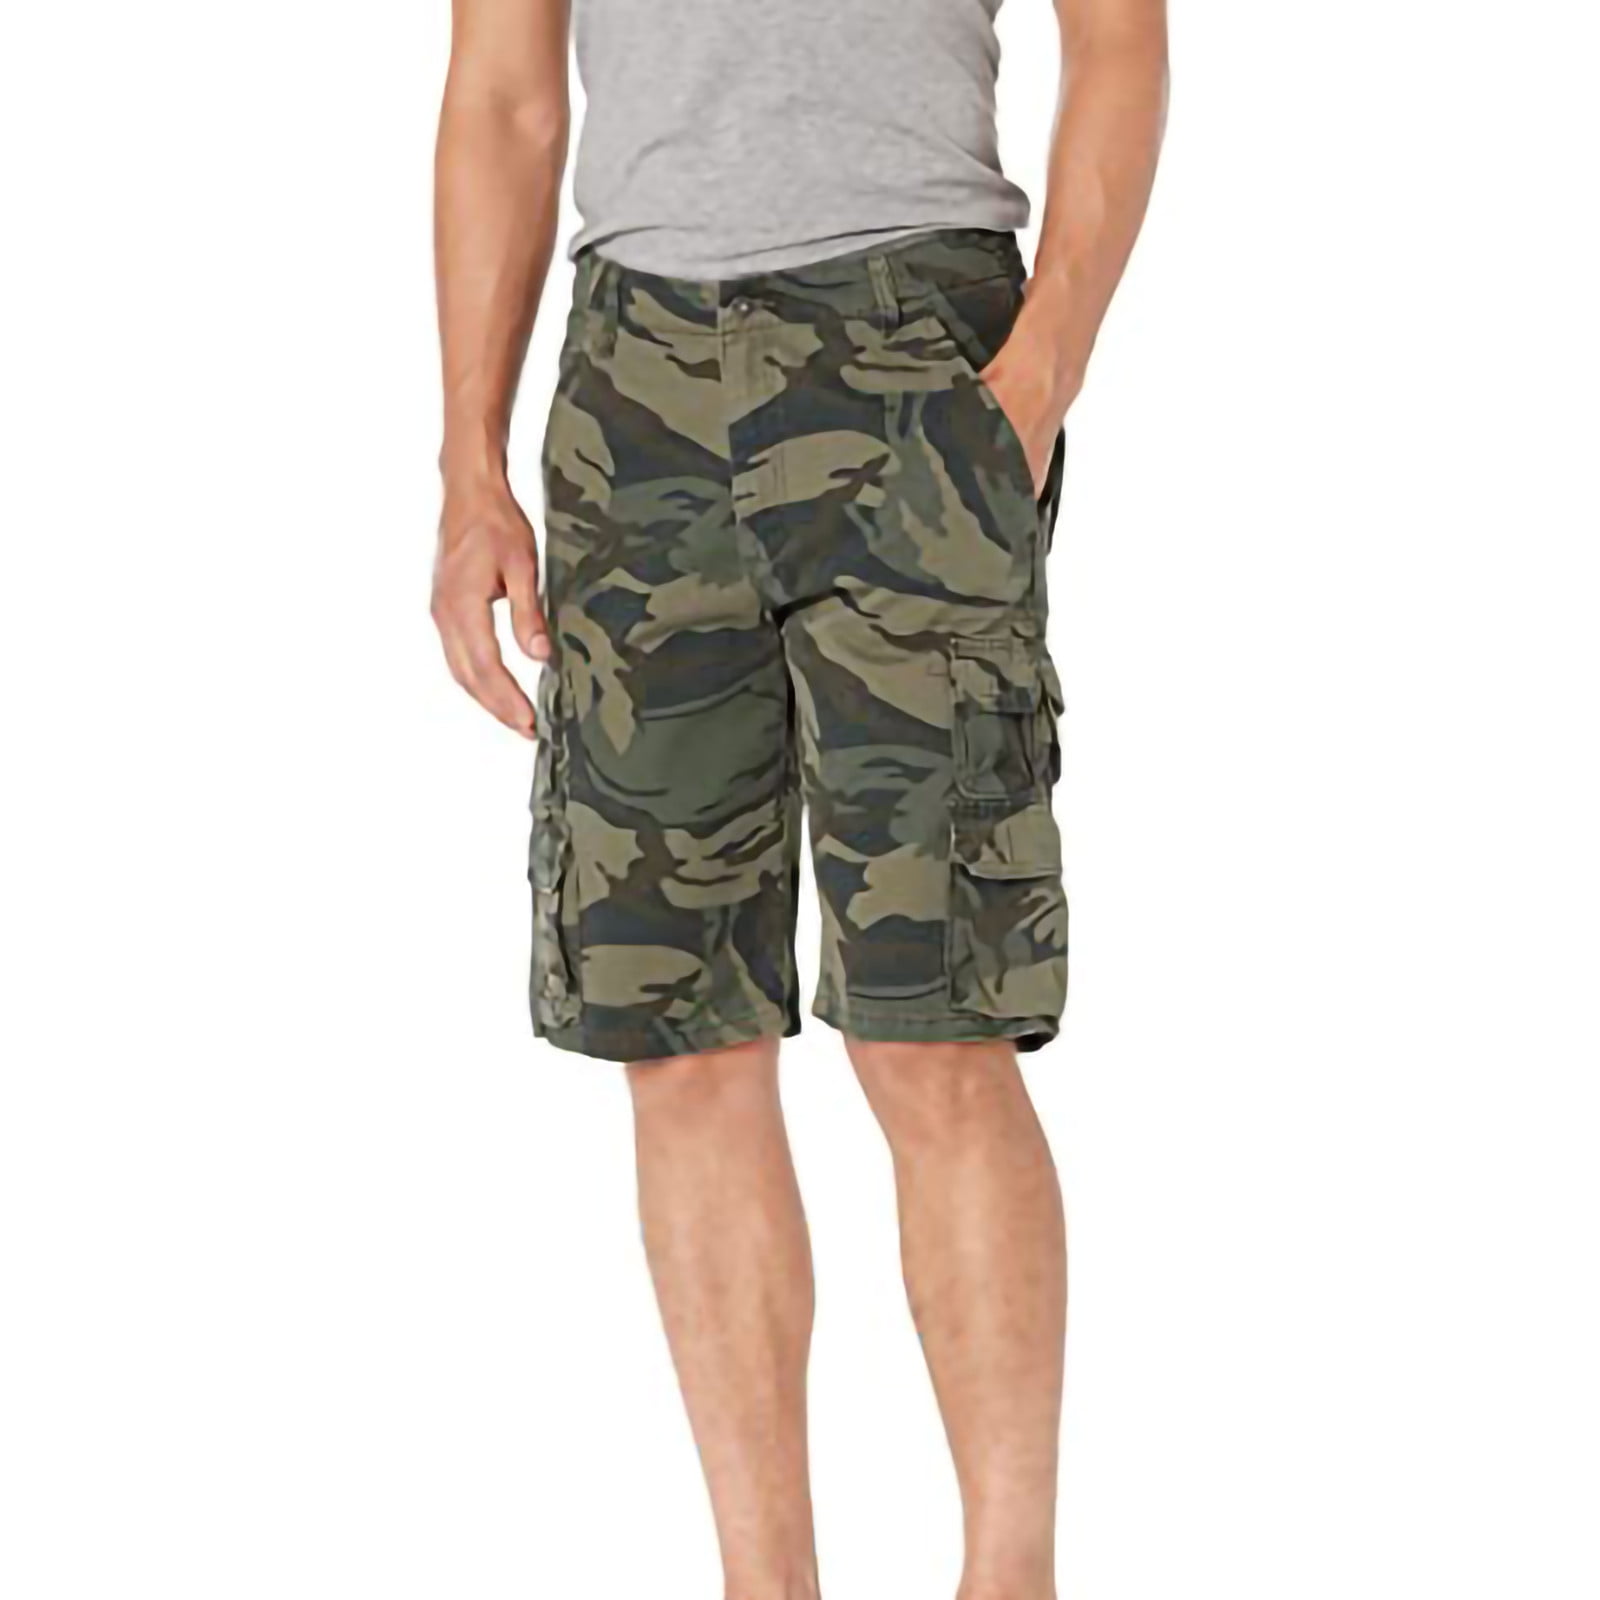 APTRO Men's Camo Cargo Shorts Relaxed Fit Premium Twill Multi-Pockets Camouflage Shorts 